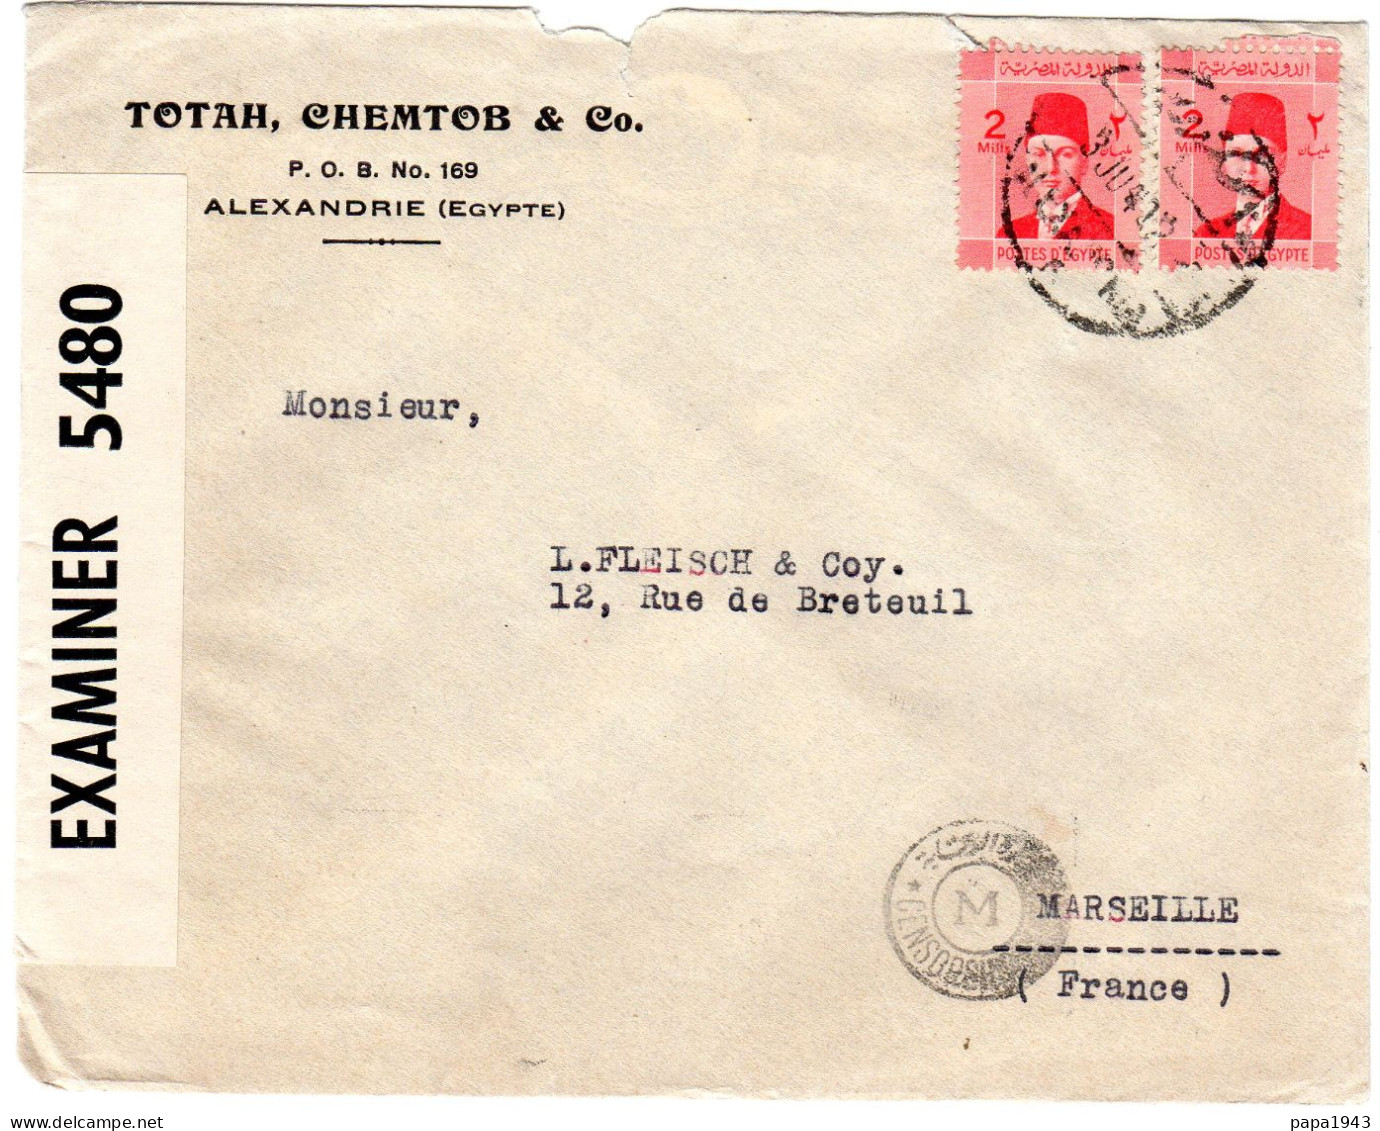 1942  "  TOTAH CHEMTOB & Co ALEXANDRIE EGYPTE "  Censure  " OPENED  BY  EXAMINER 5480 - Briefe U. Dokumente